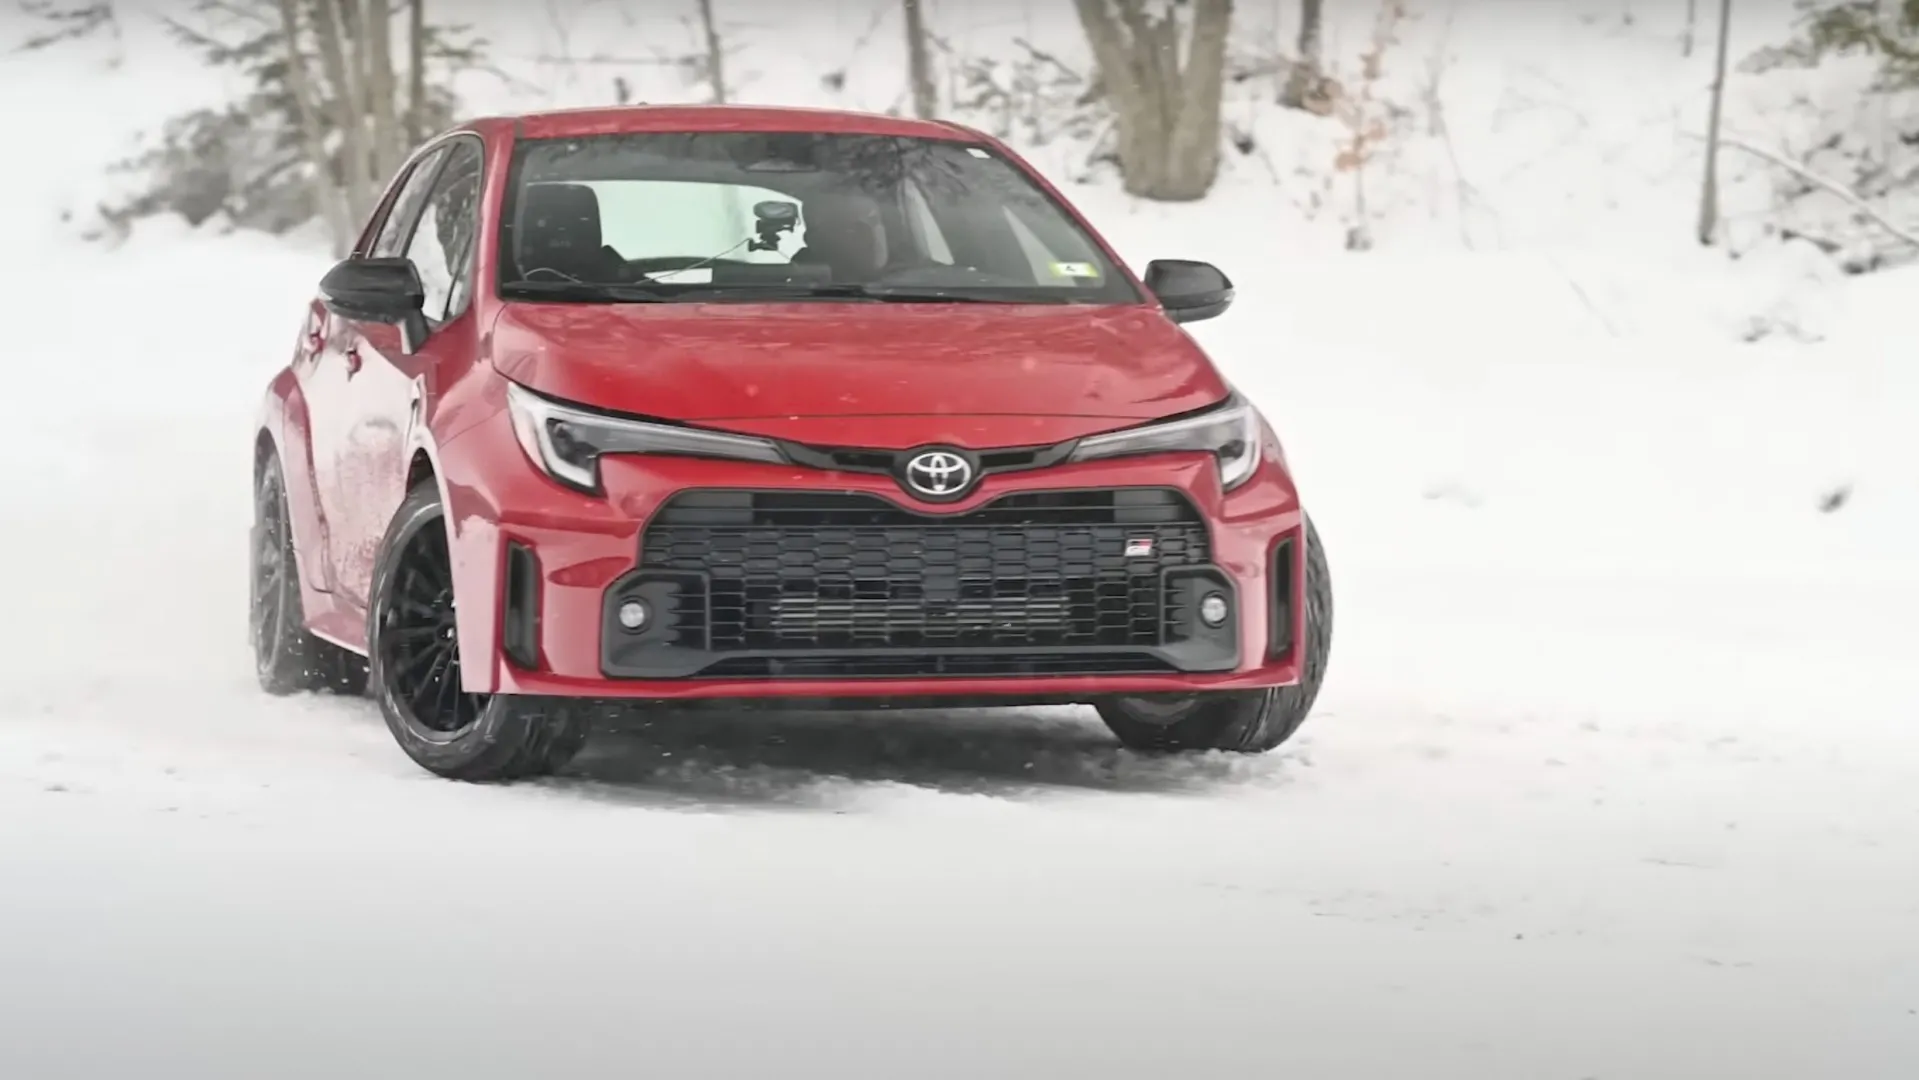 Refréscate viendo al Toyota GR Corolla deslizarse por la nieve